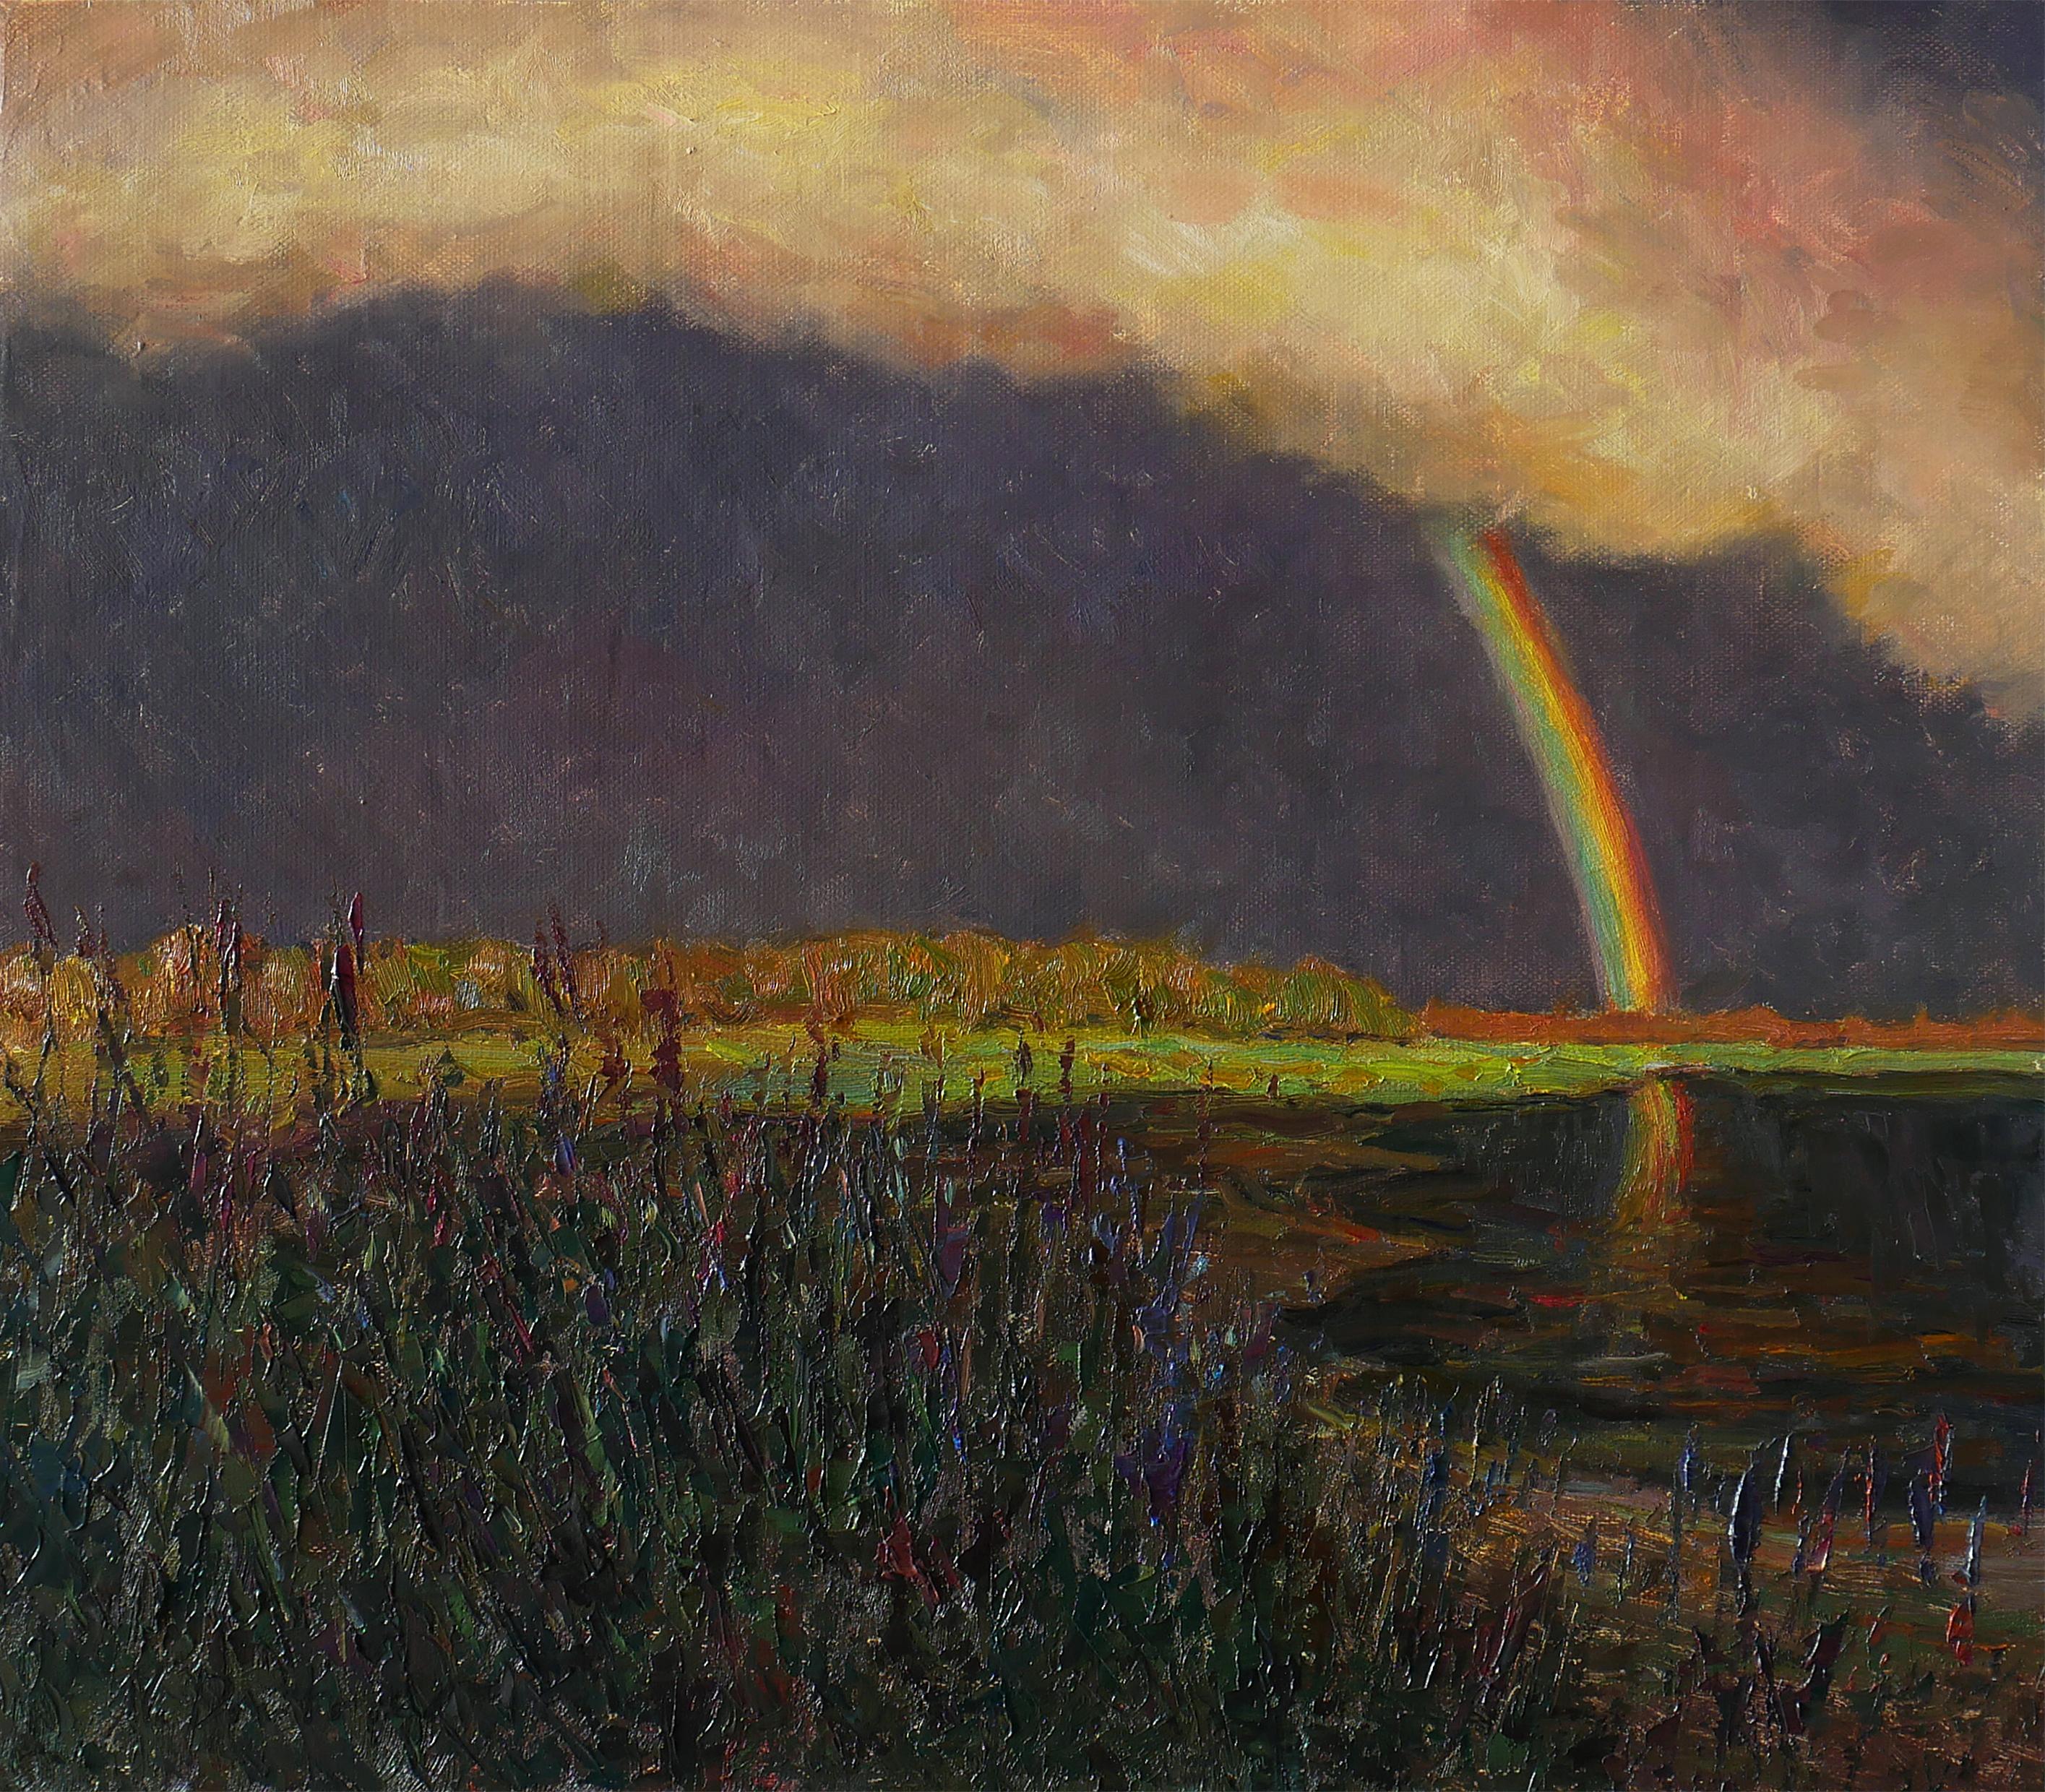 Nikolay Dmitriev Landscape Painting - Rainbow. After Rain - original landscape painting